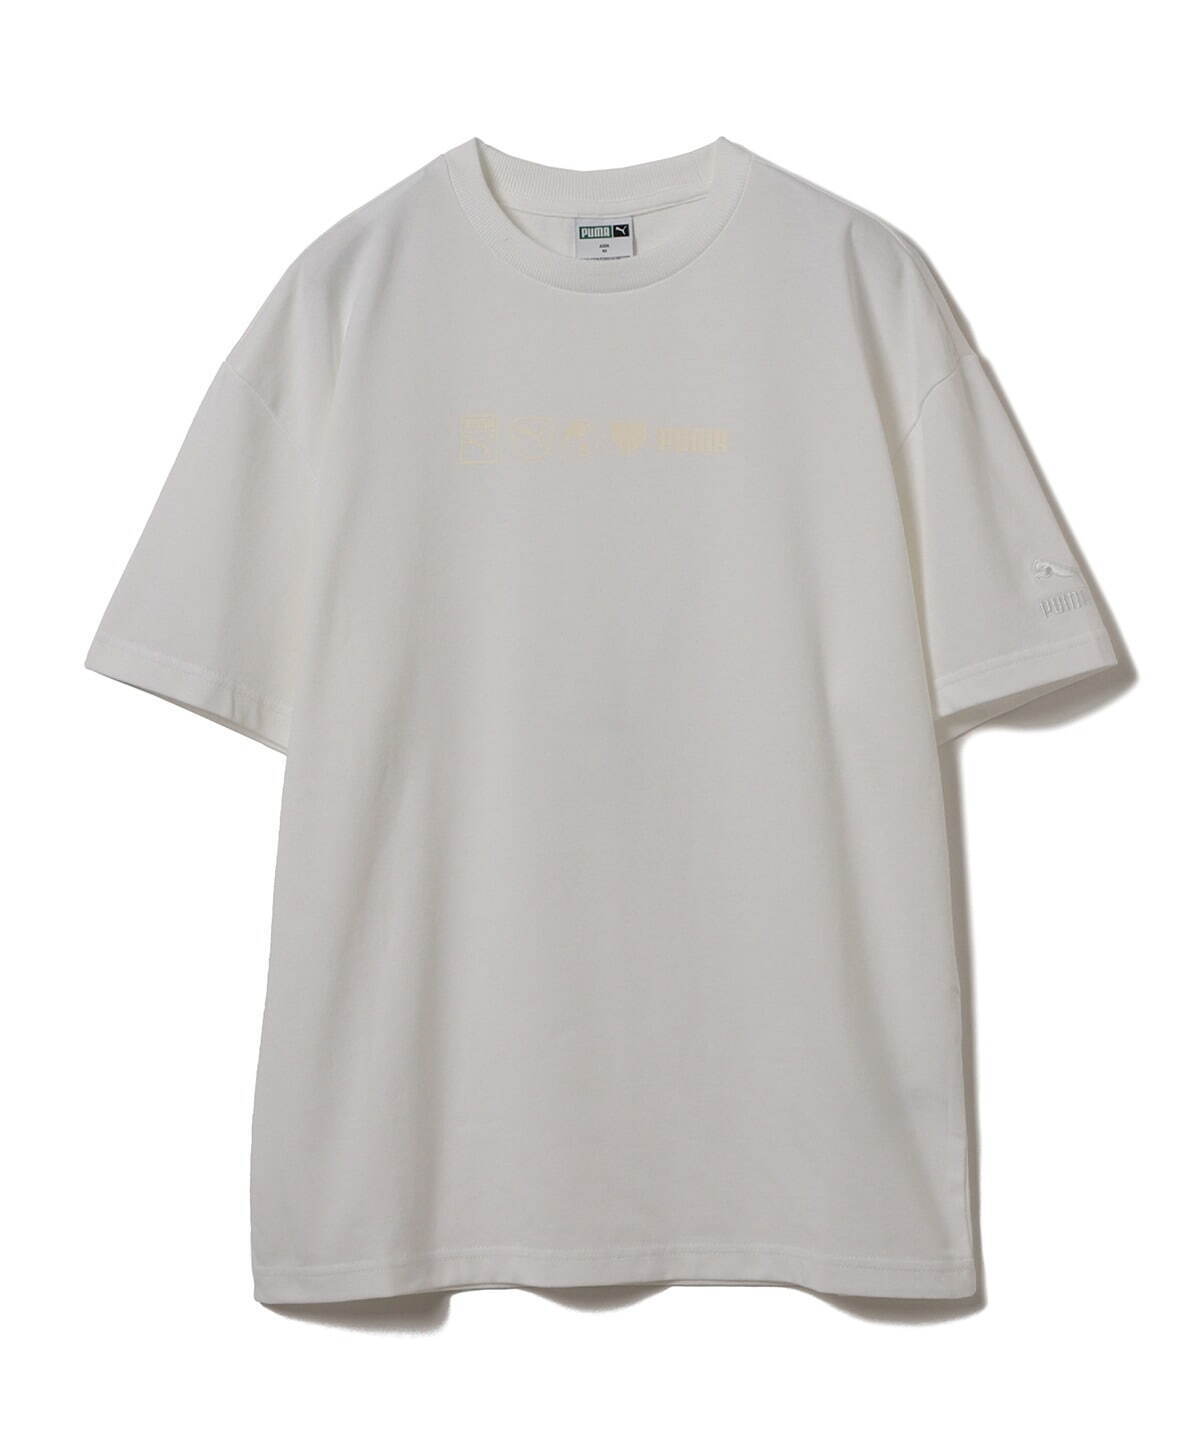 Tシャツ 6,600円